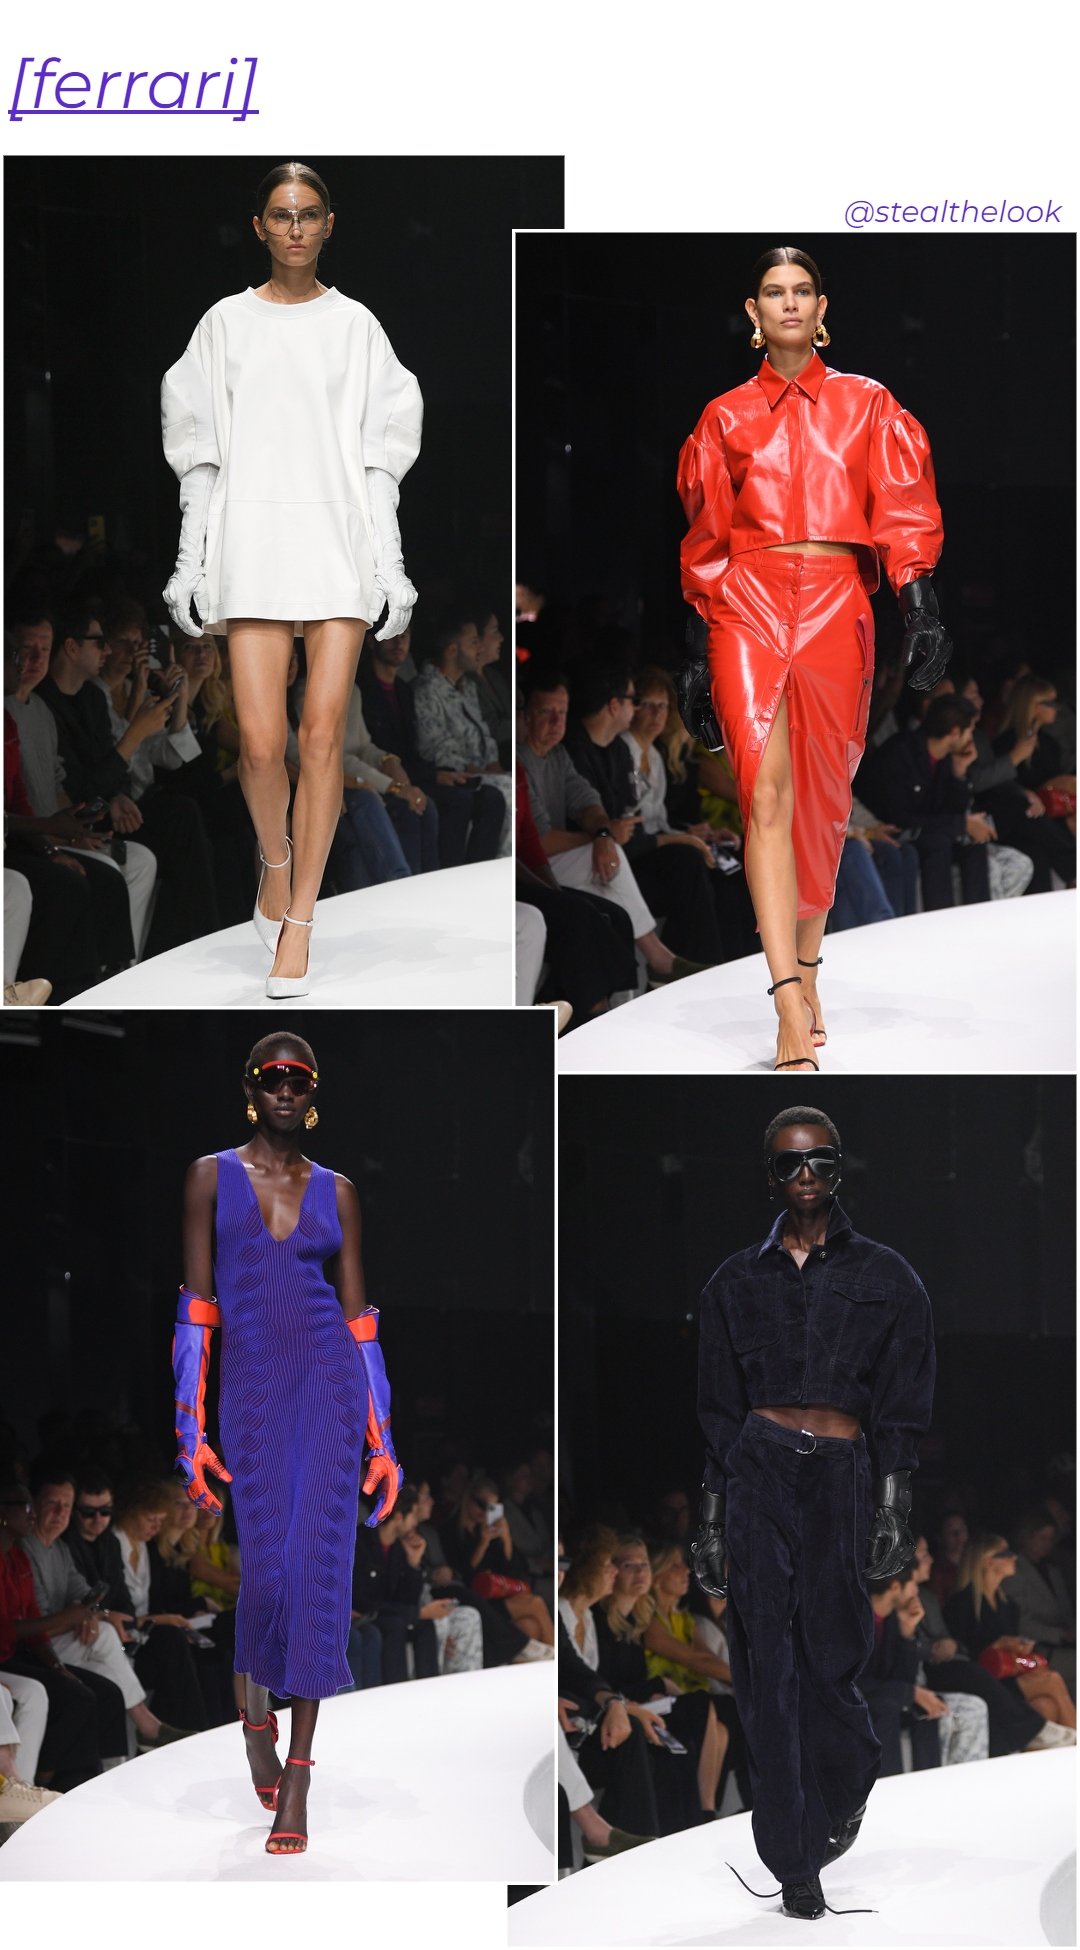 Milano Fashion Week: Fendi, Diesel e outros destaques do primeiro